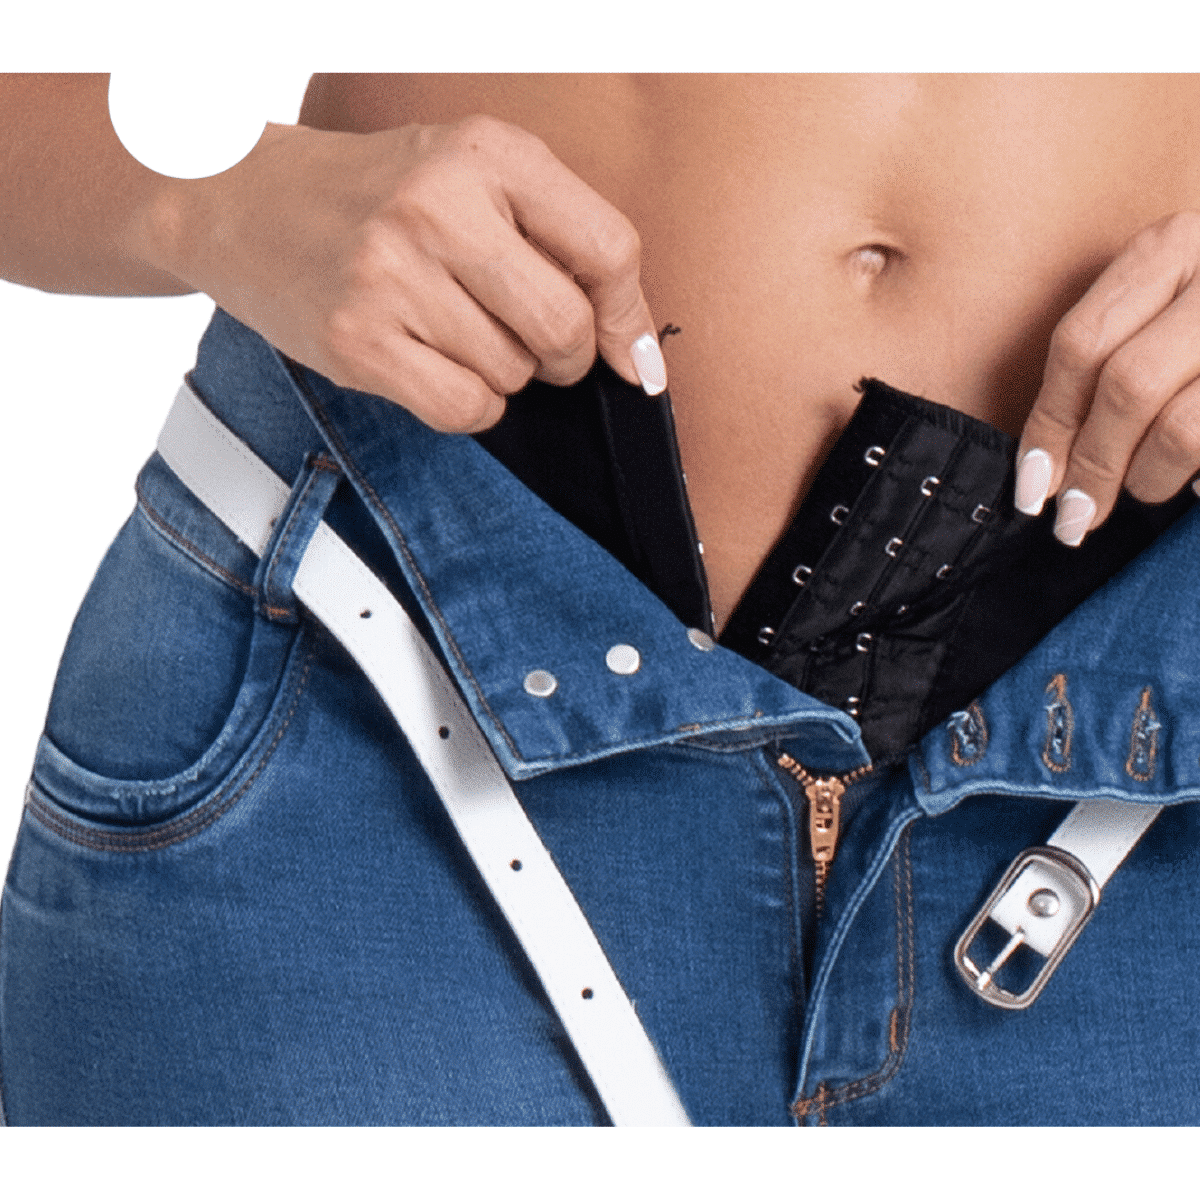 Comprar Jeans Control Abdominal con Faja Interna online